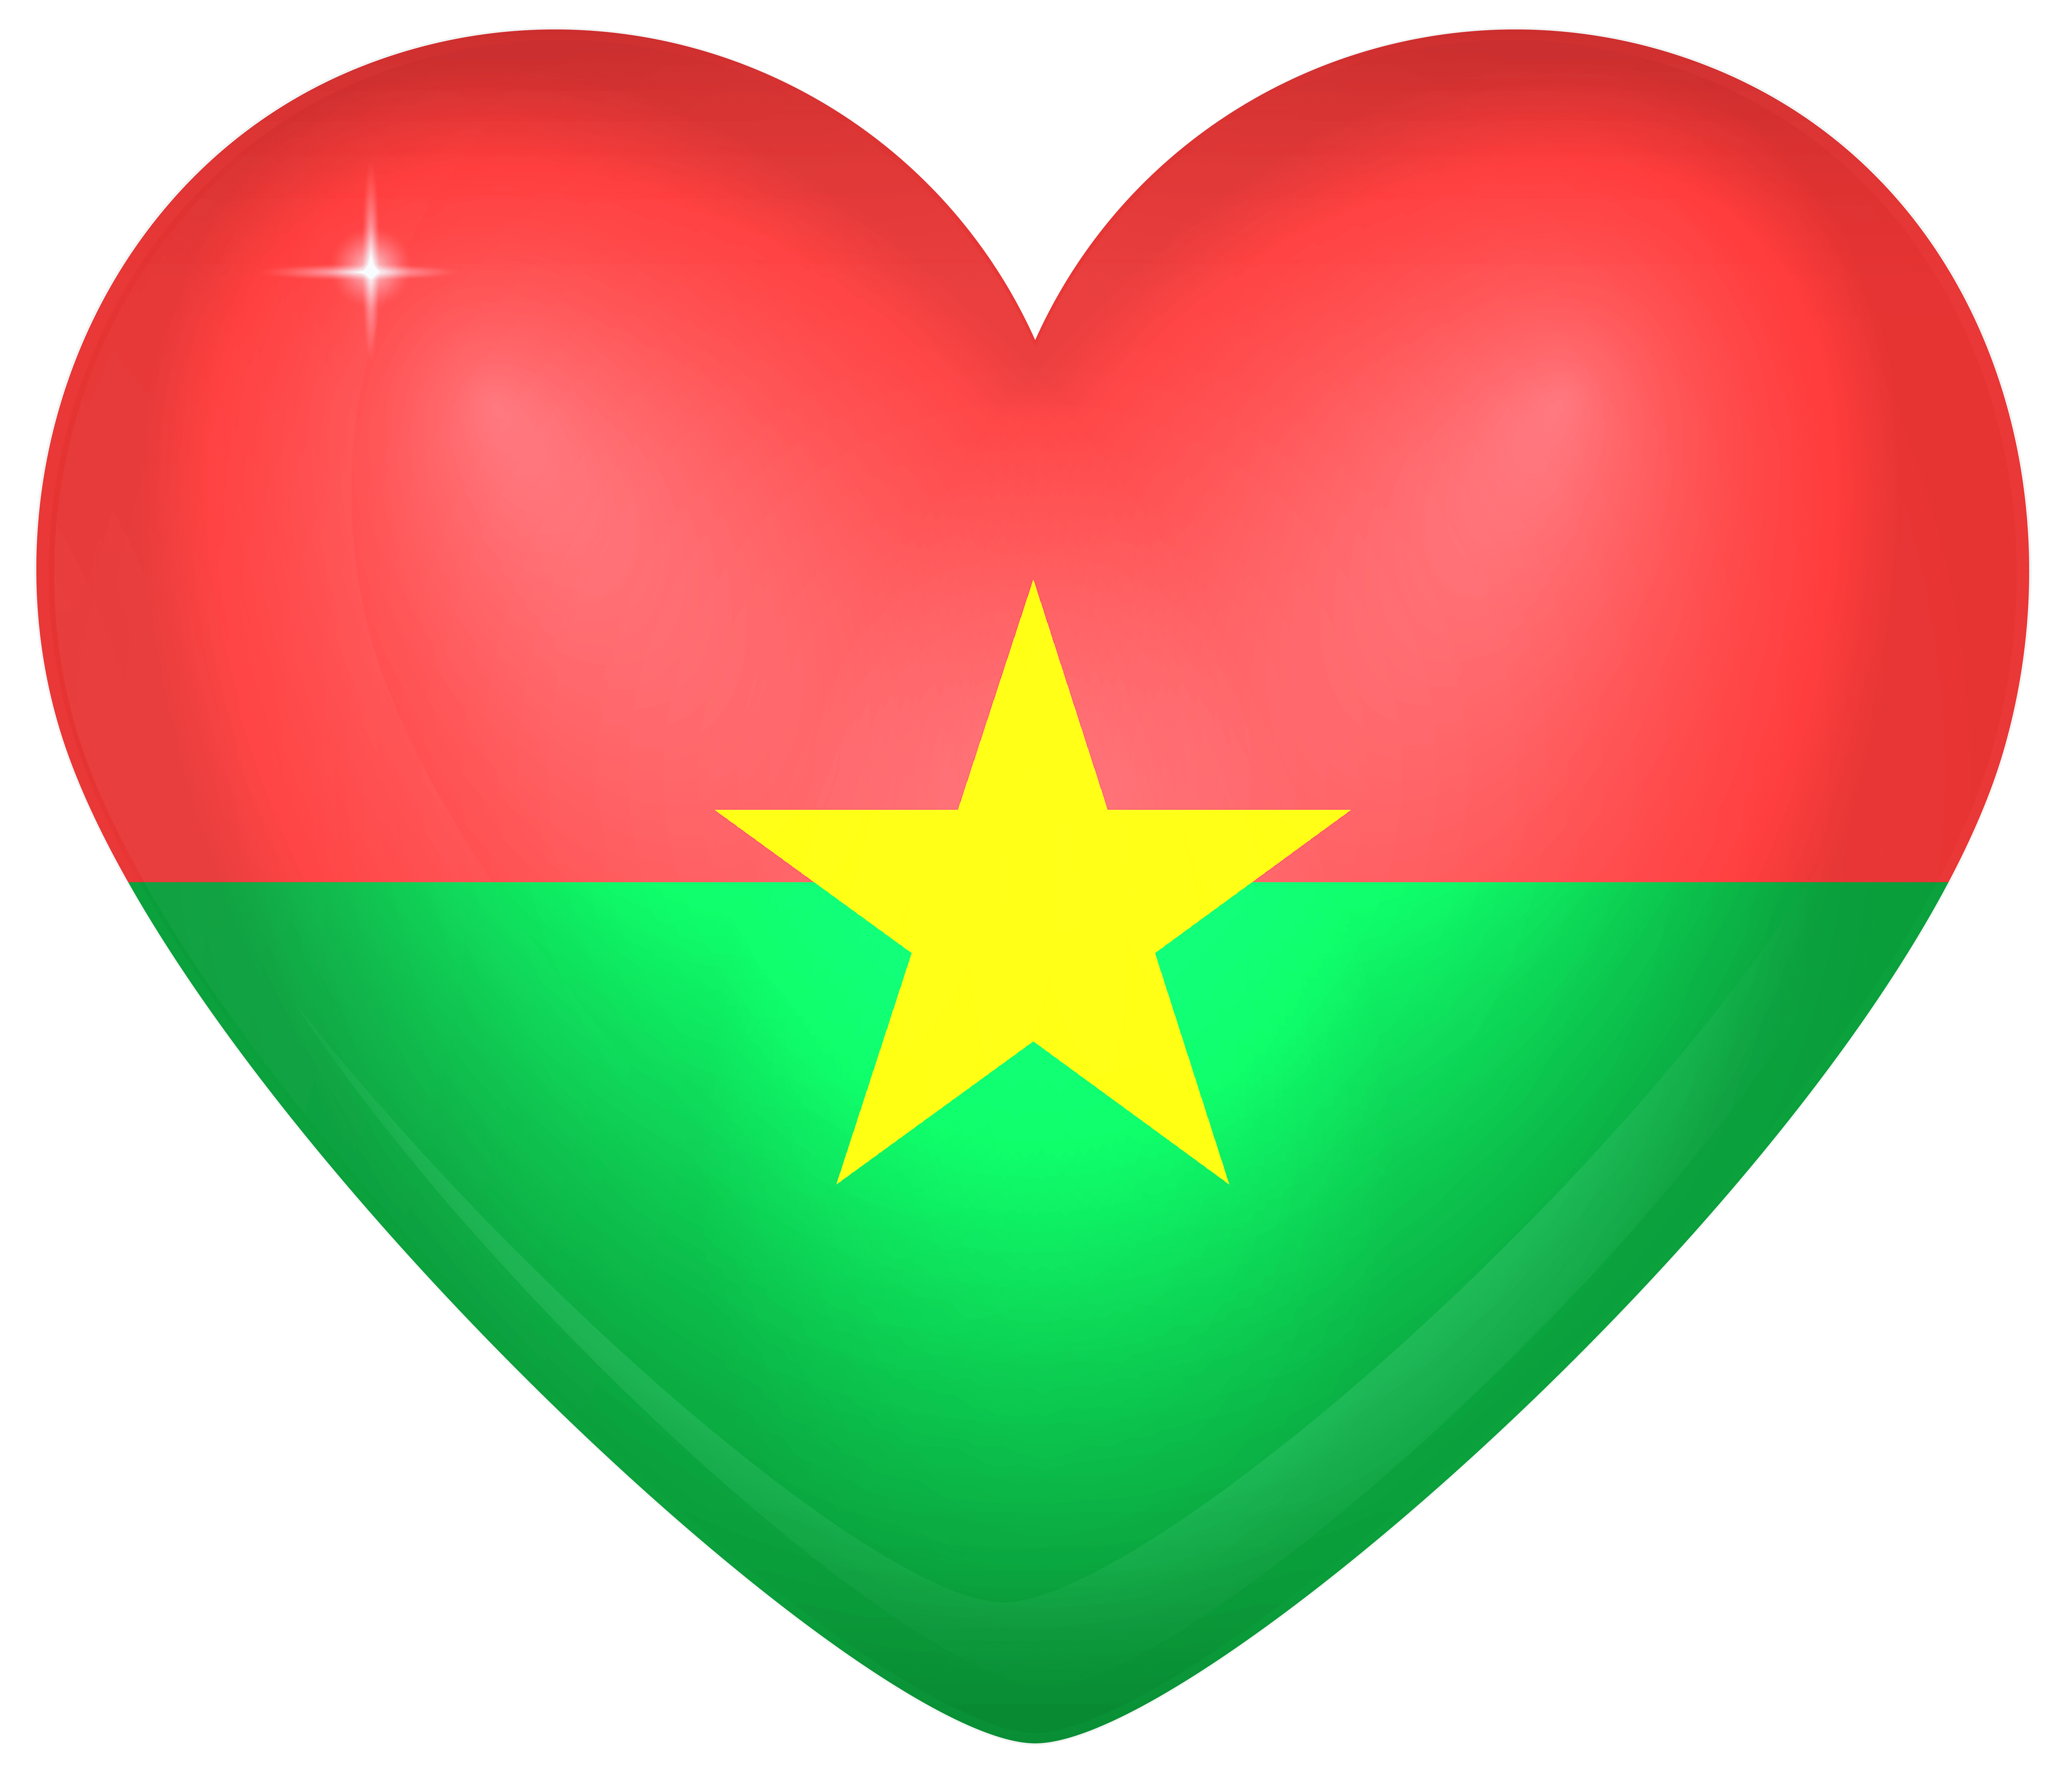 Rendu Du Drapeau Burkina Faso Flotte Dans Le Vent Gros Plan Le Drapeau  National Burkina Faso 4k